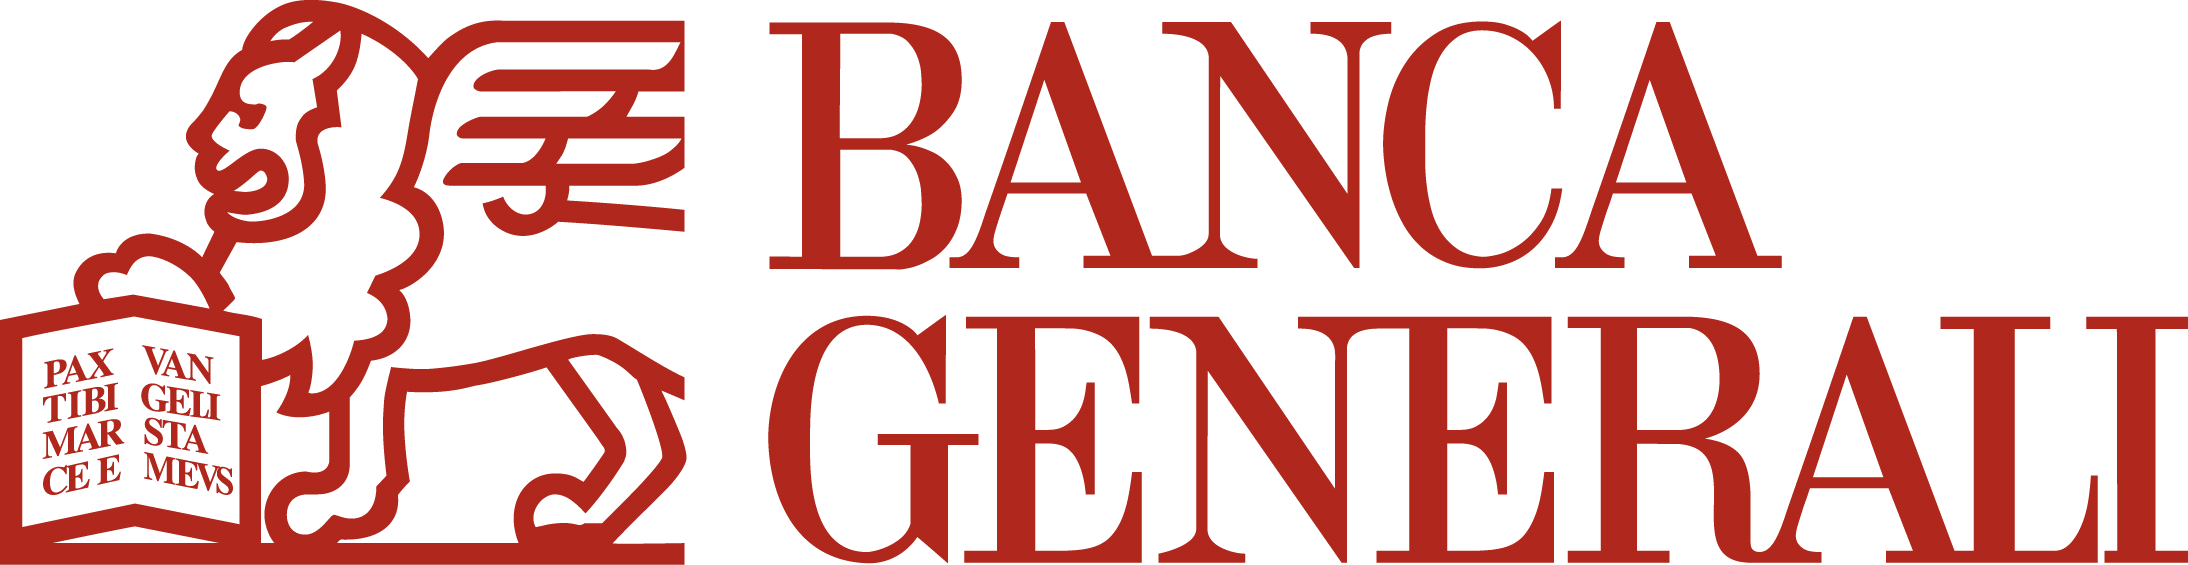 Banca Generali Logo photo - 1